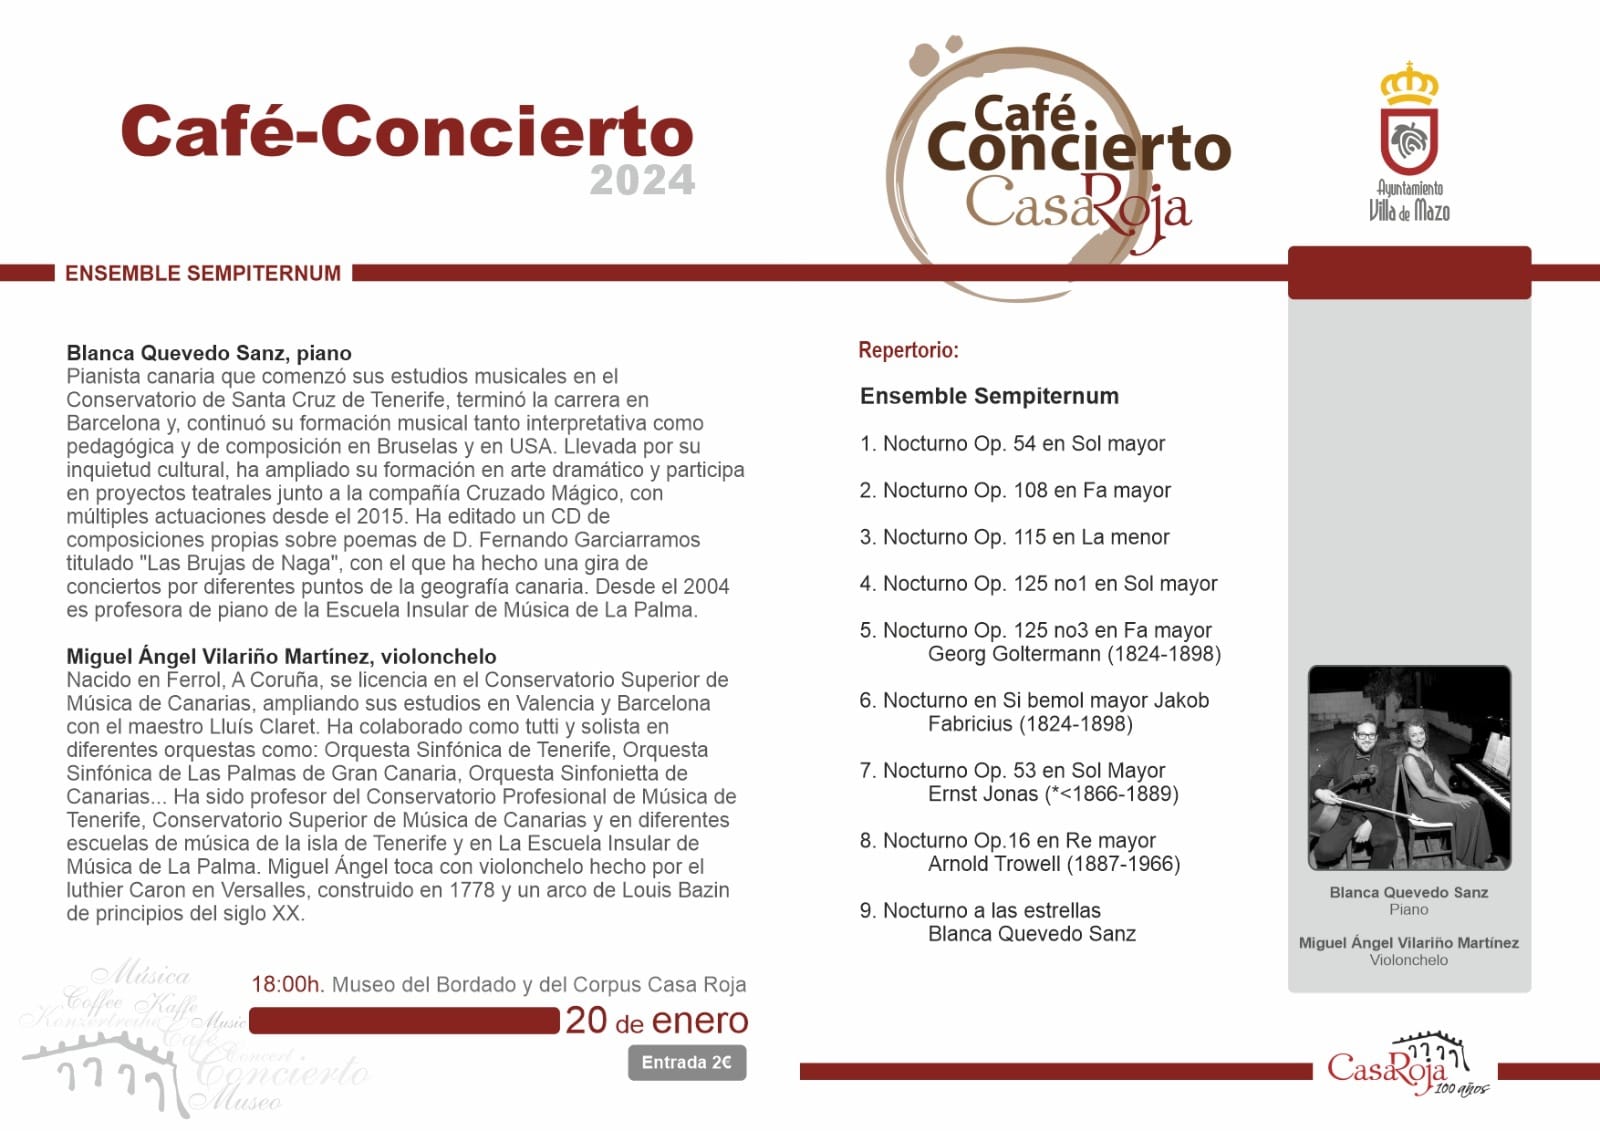 Café Concierto en la Casa Roja, con Ensemble Sempiternun